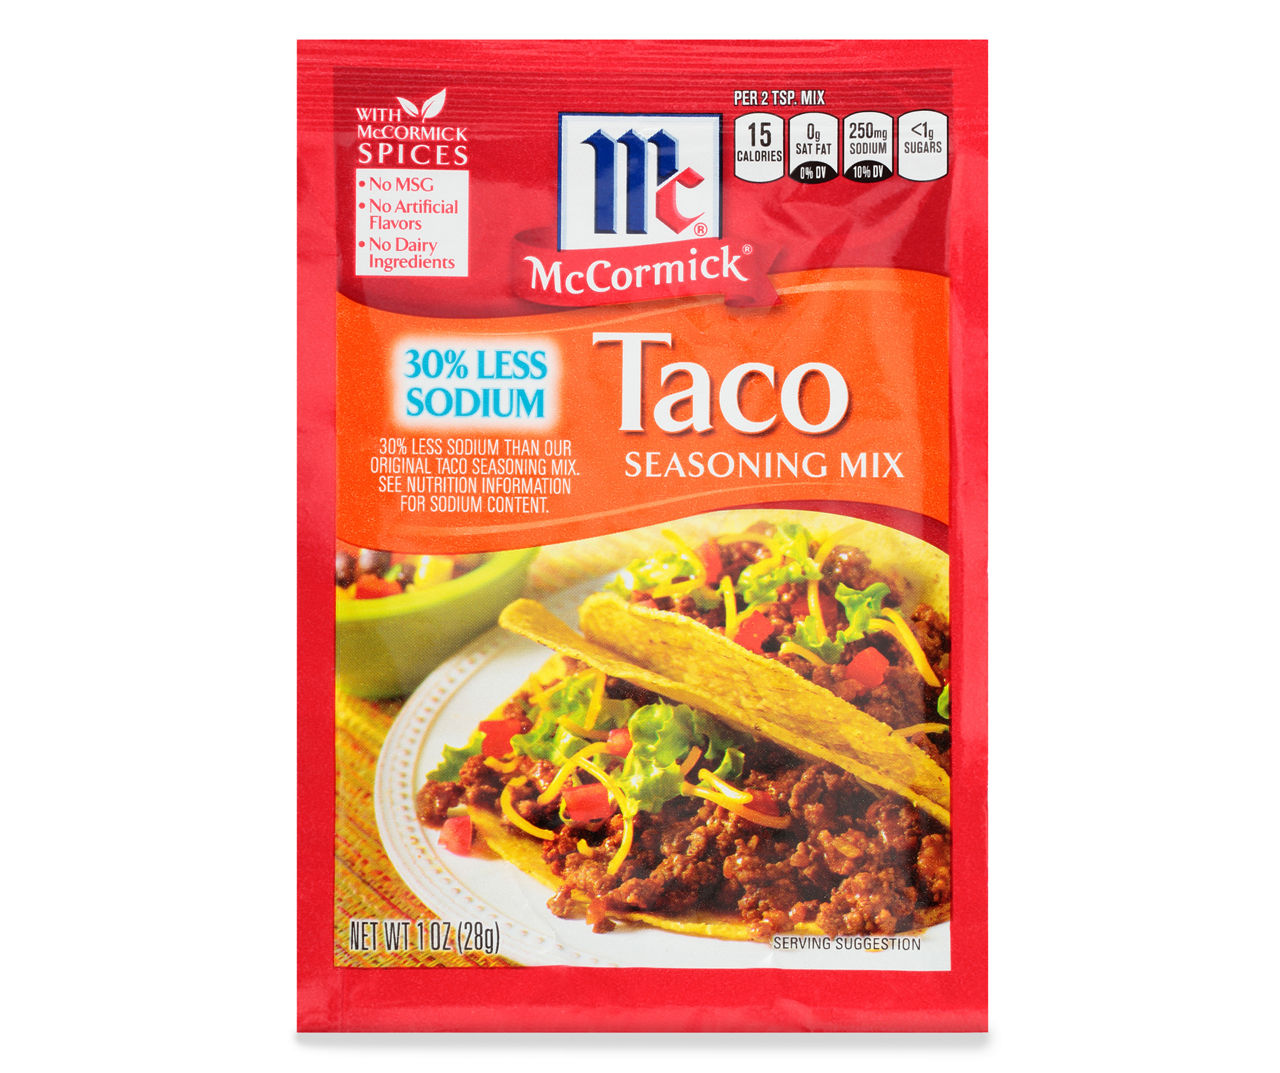 McCormick Seasoning Mix, Taco, 30% Less Sodium, Salt, Spices & Seasonings